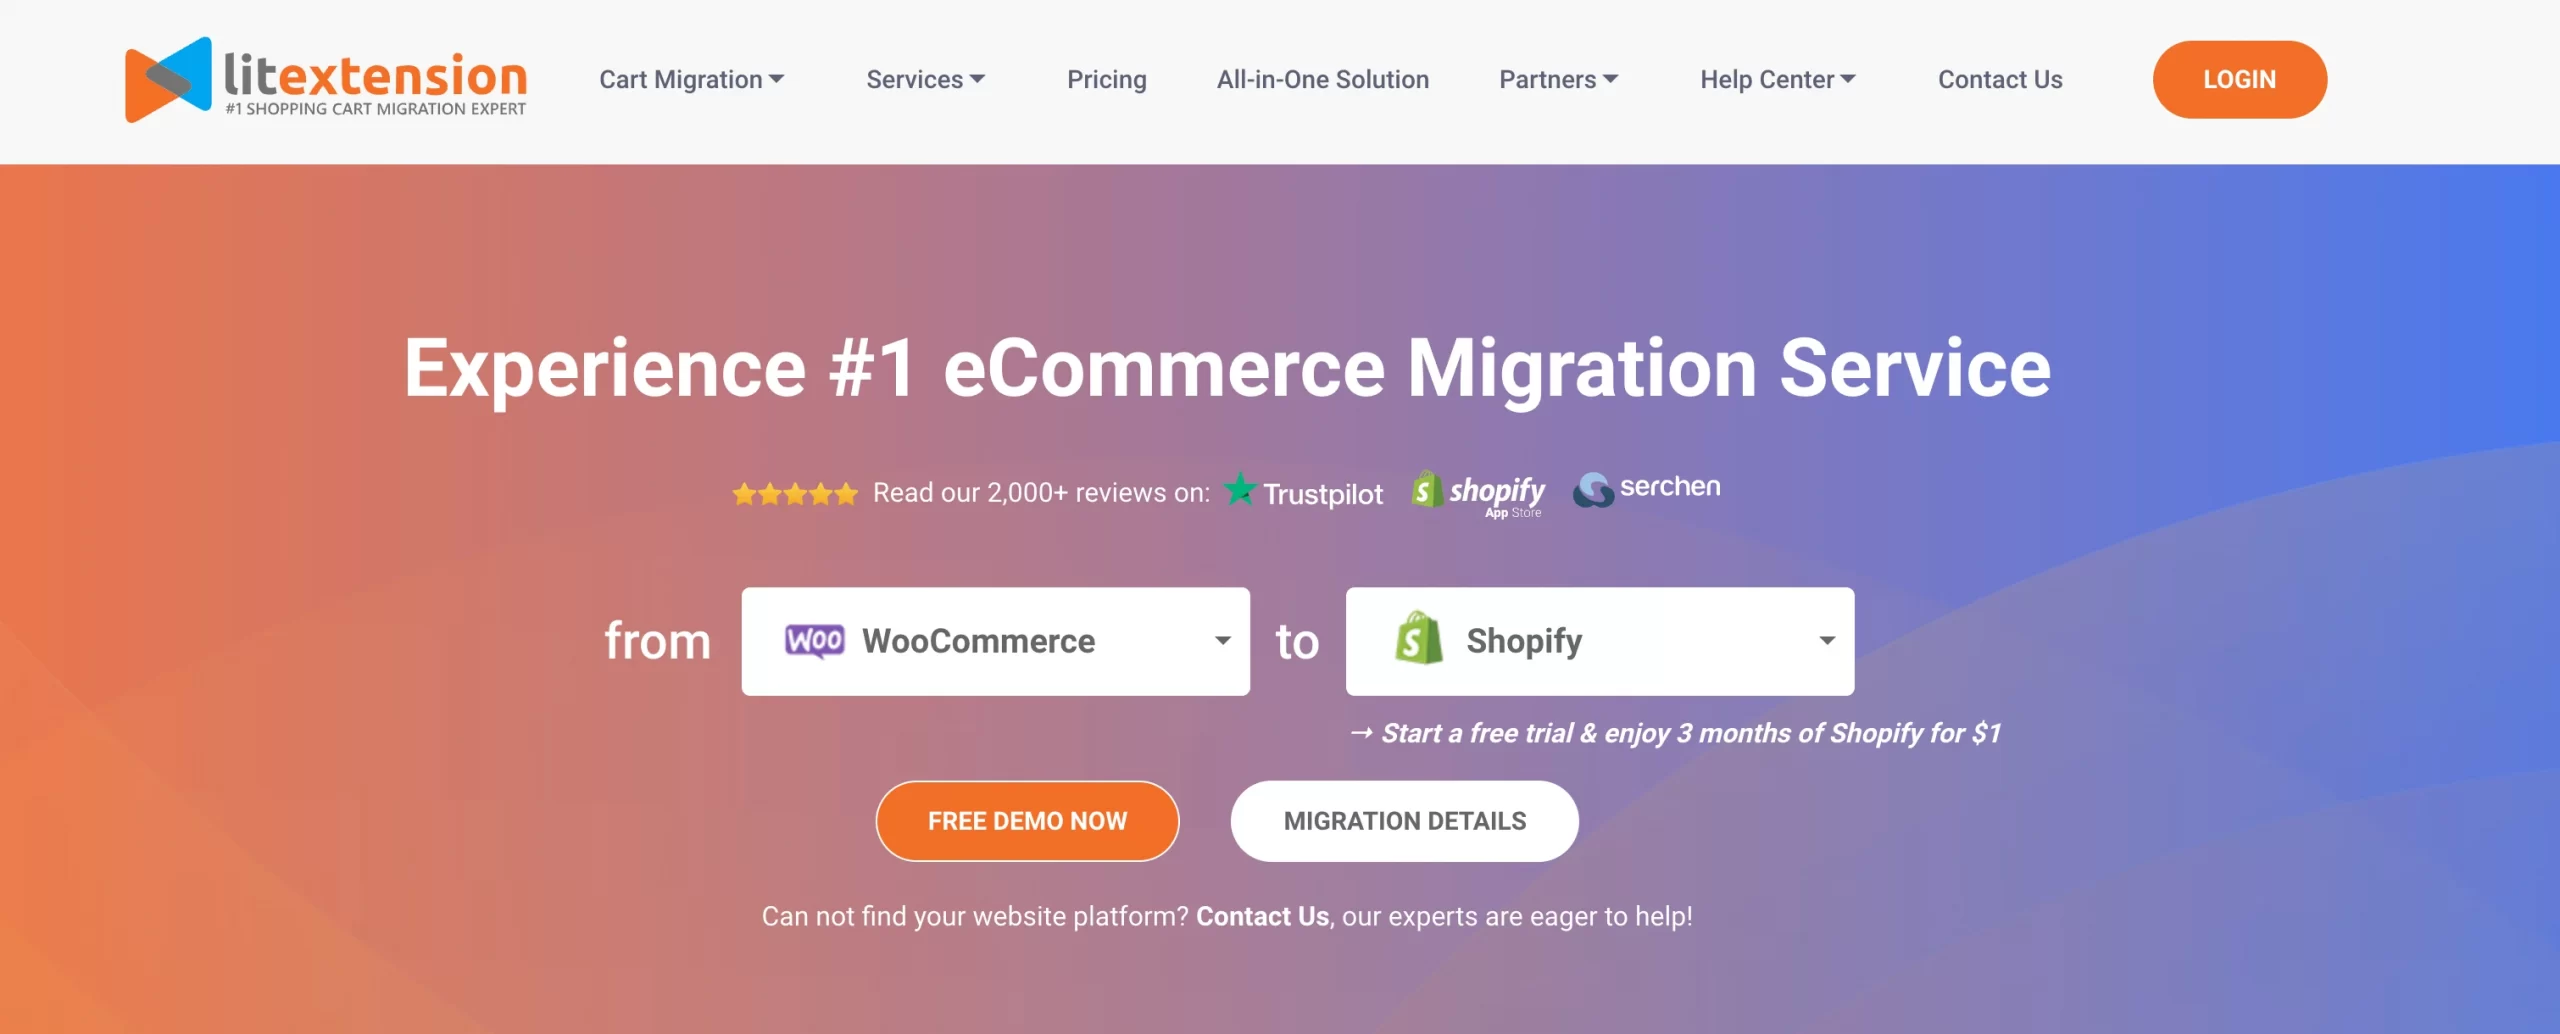 LitExtension - #1 eCommerce migration service